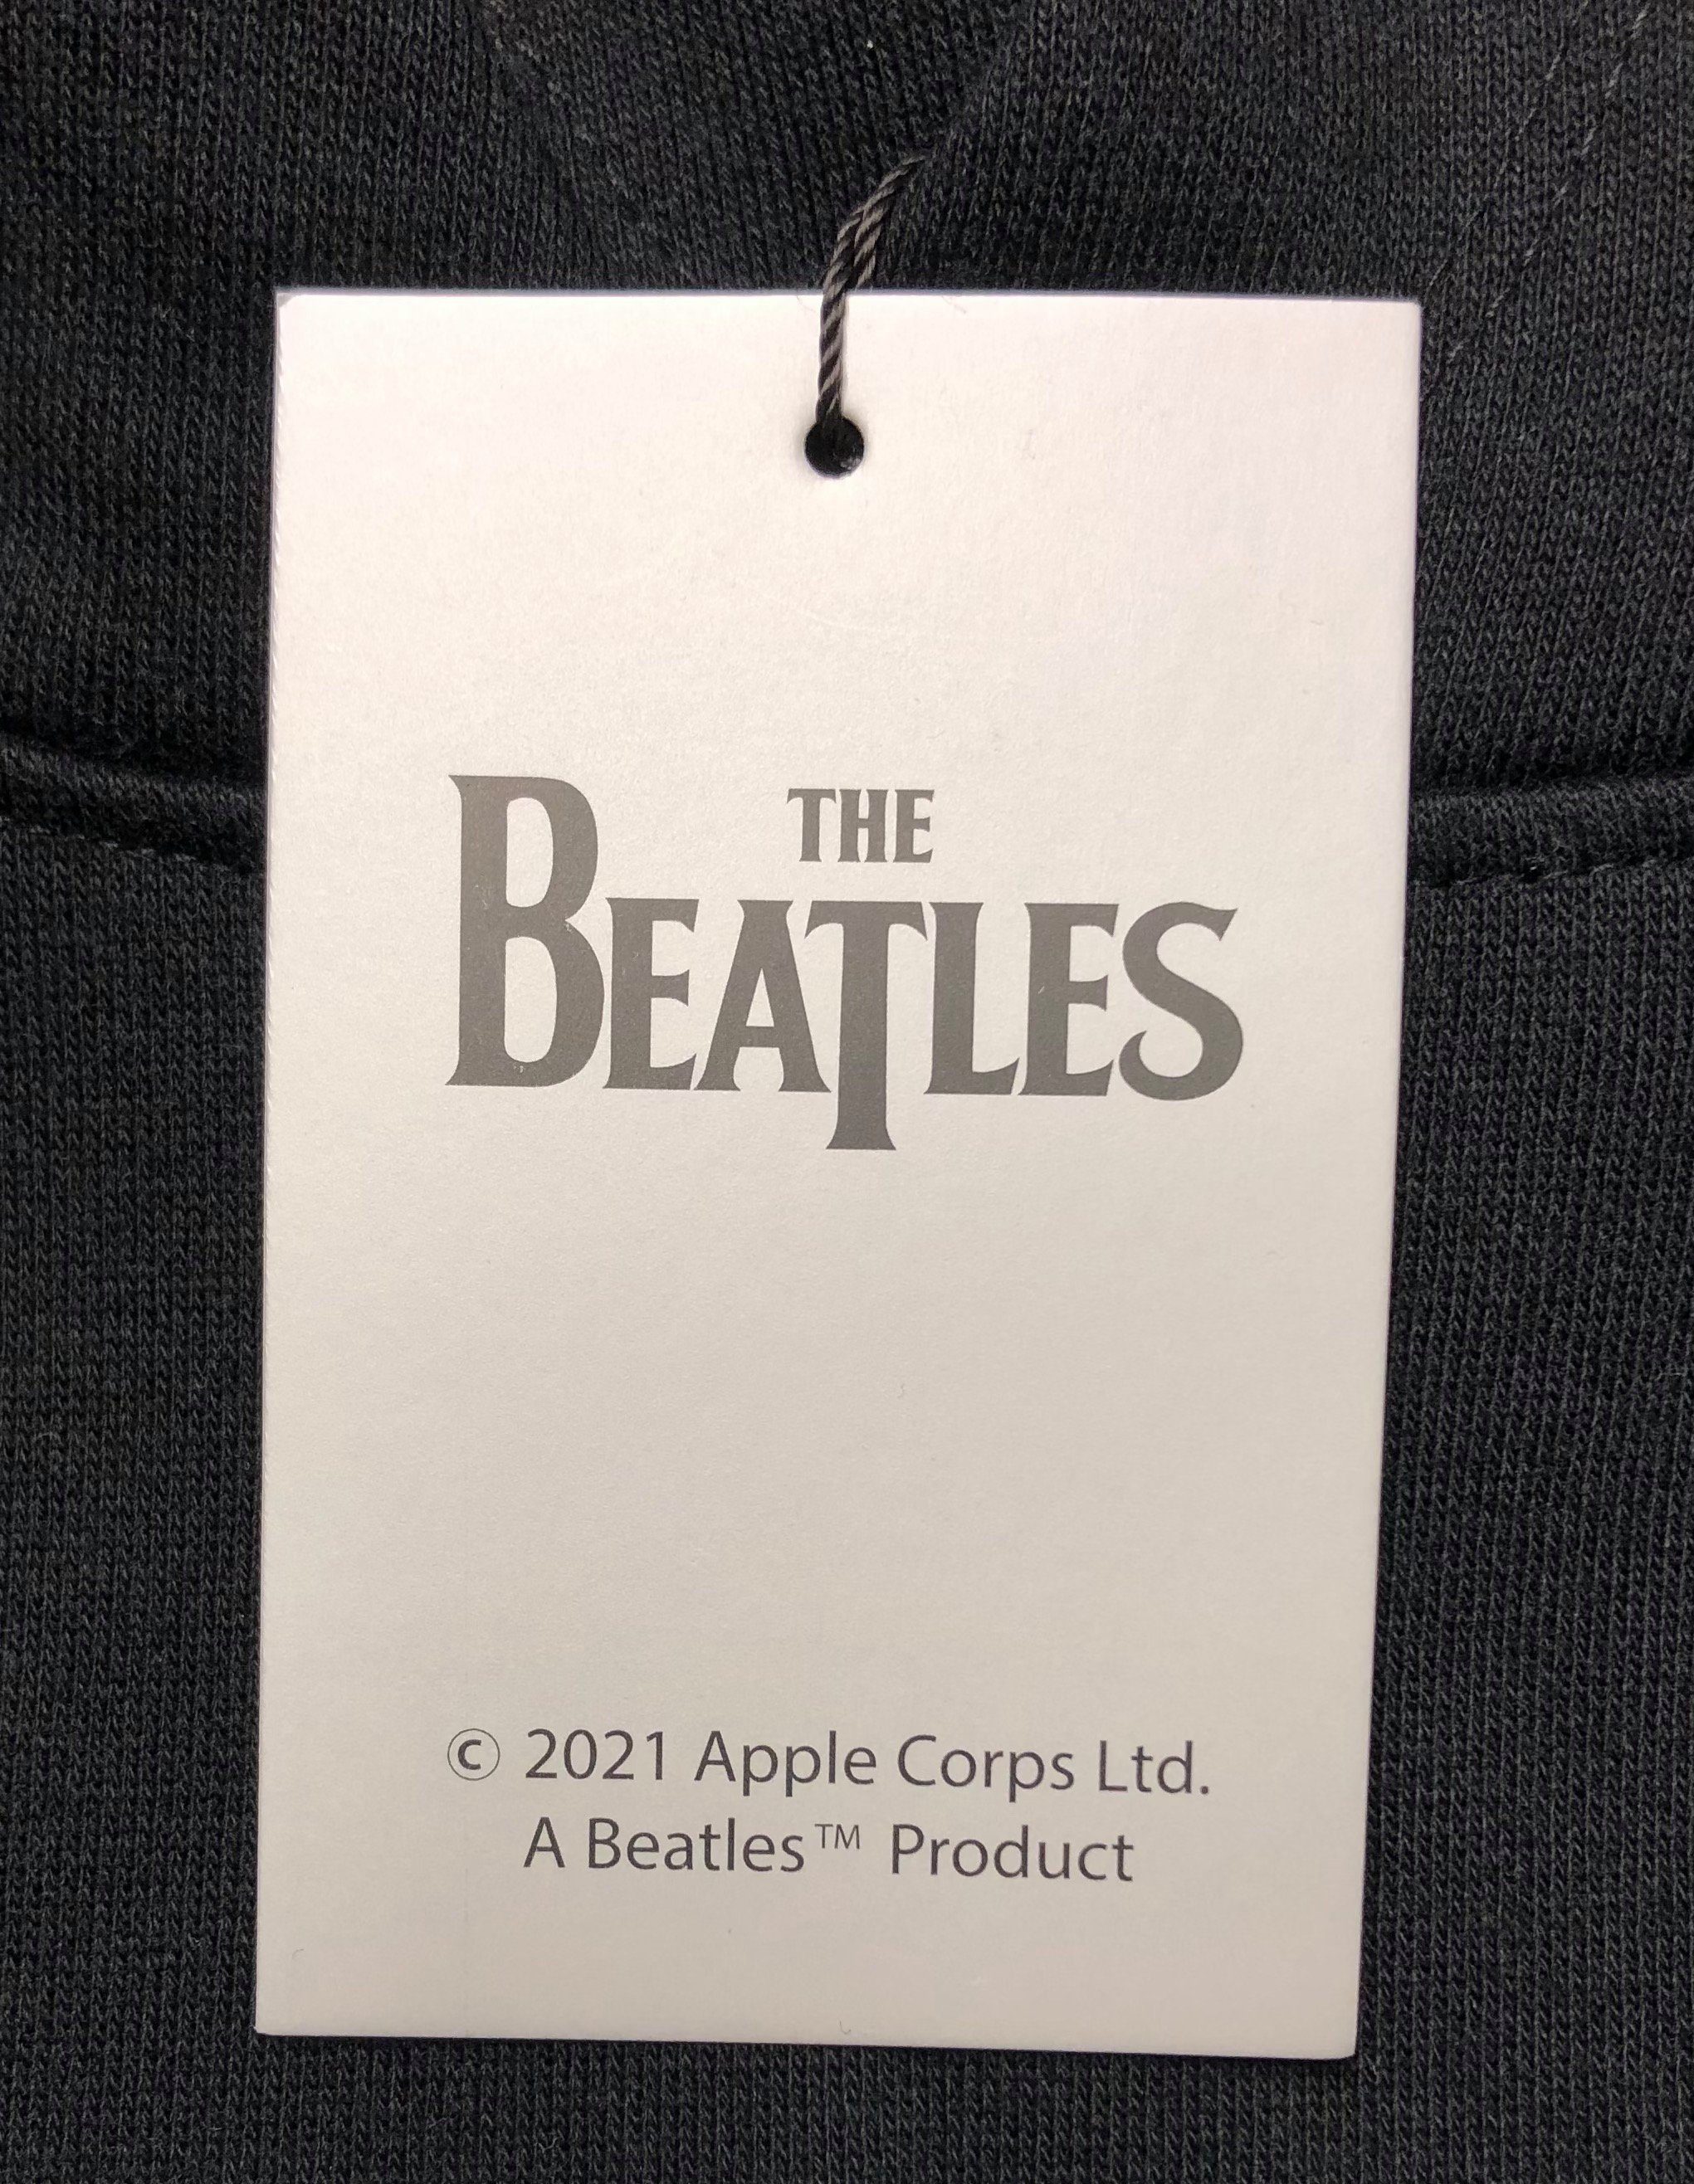 Gots Frontprint mit "Logo", Hoodie, Beatles, Herren (Stück, Beatles Stück) 1-tlg., The Kapuzensweatshirt